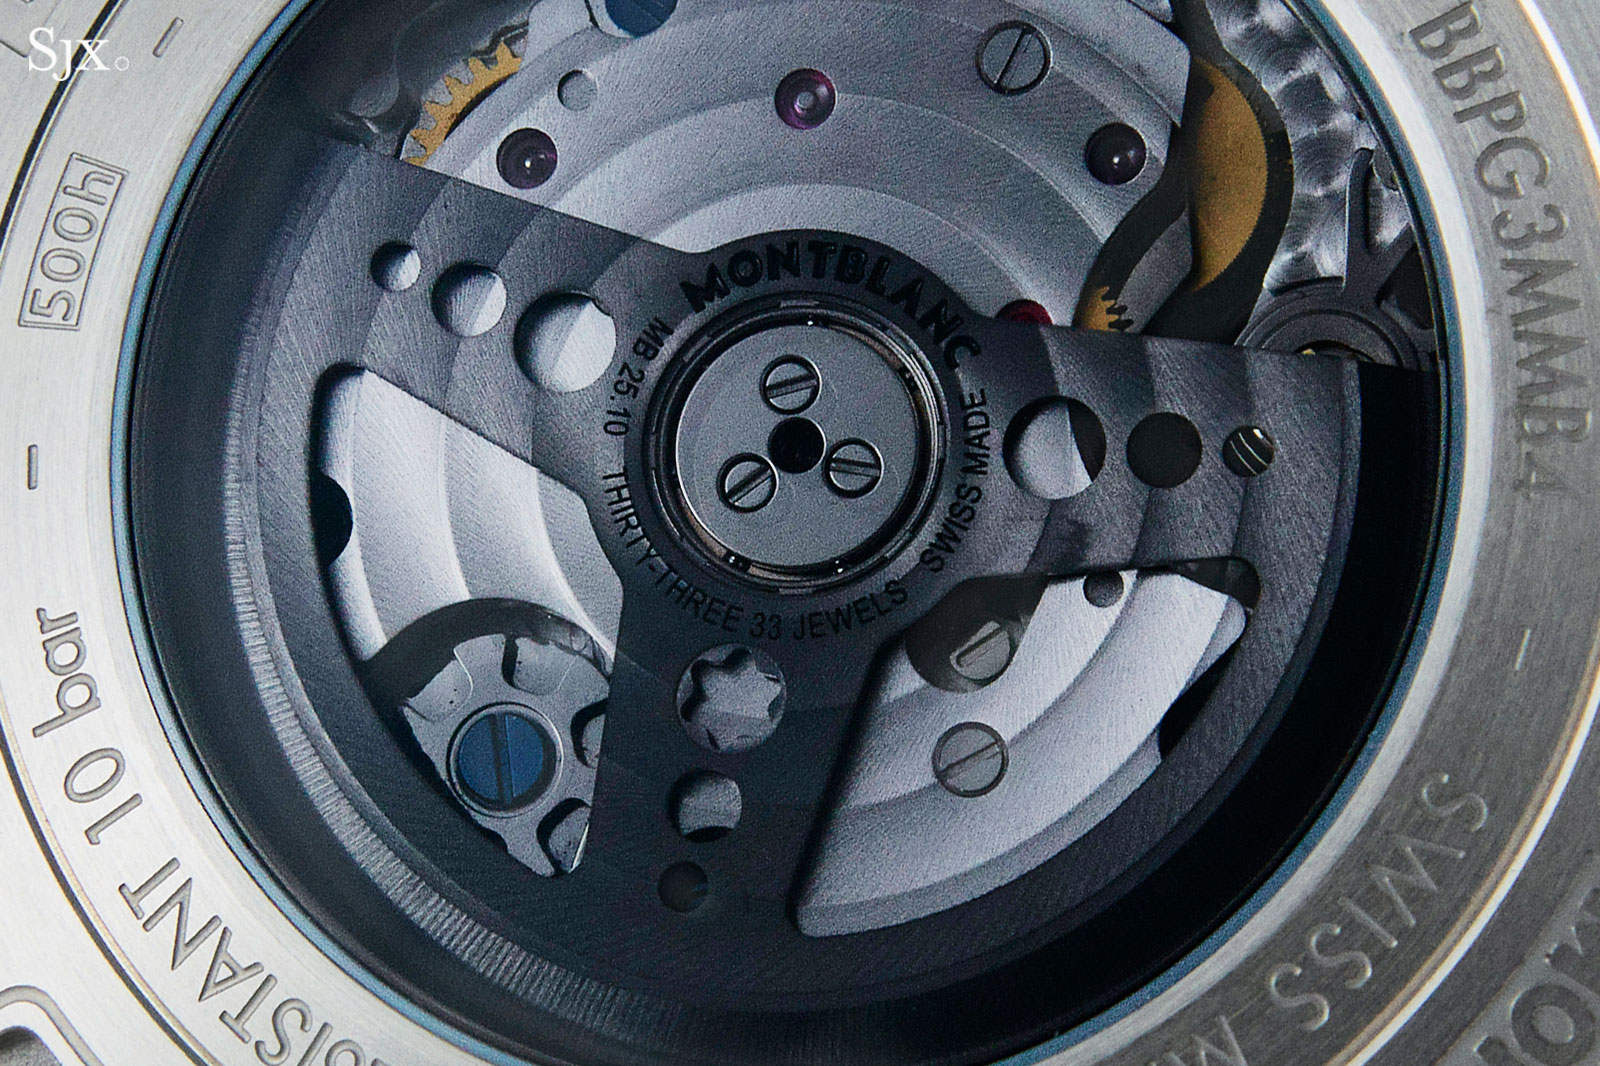 Montblanc TimeWalker Chronograph reverse panda manufacture movement